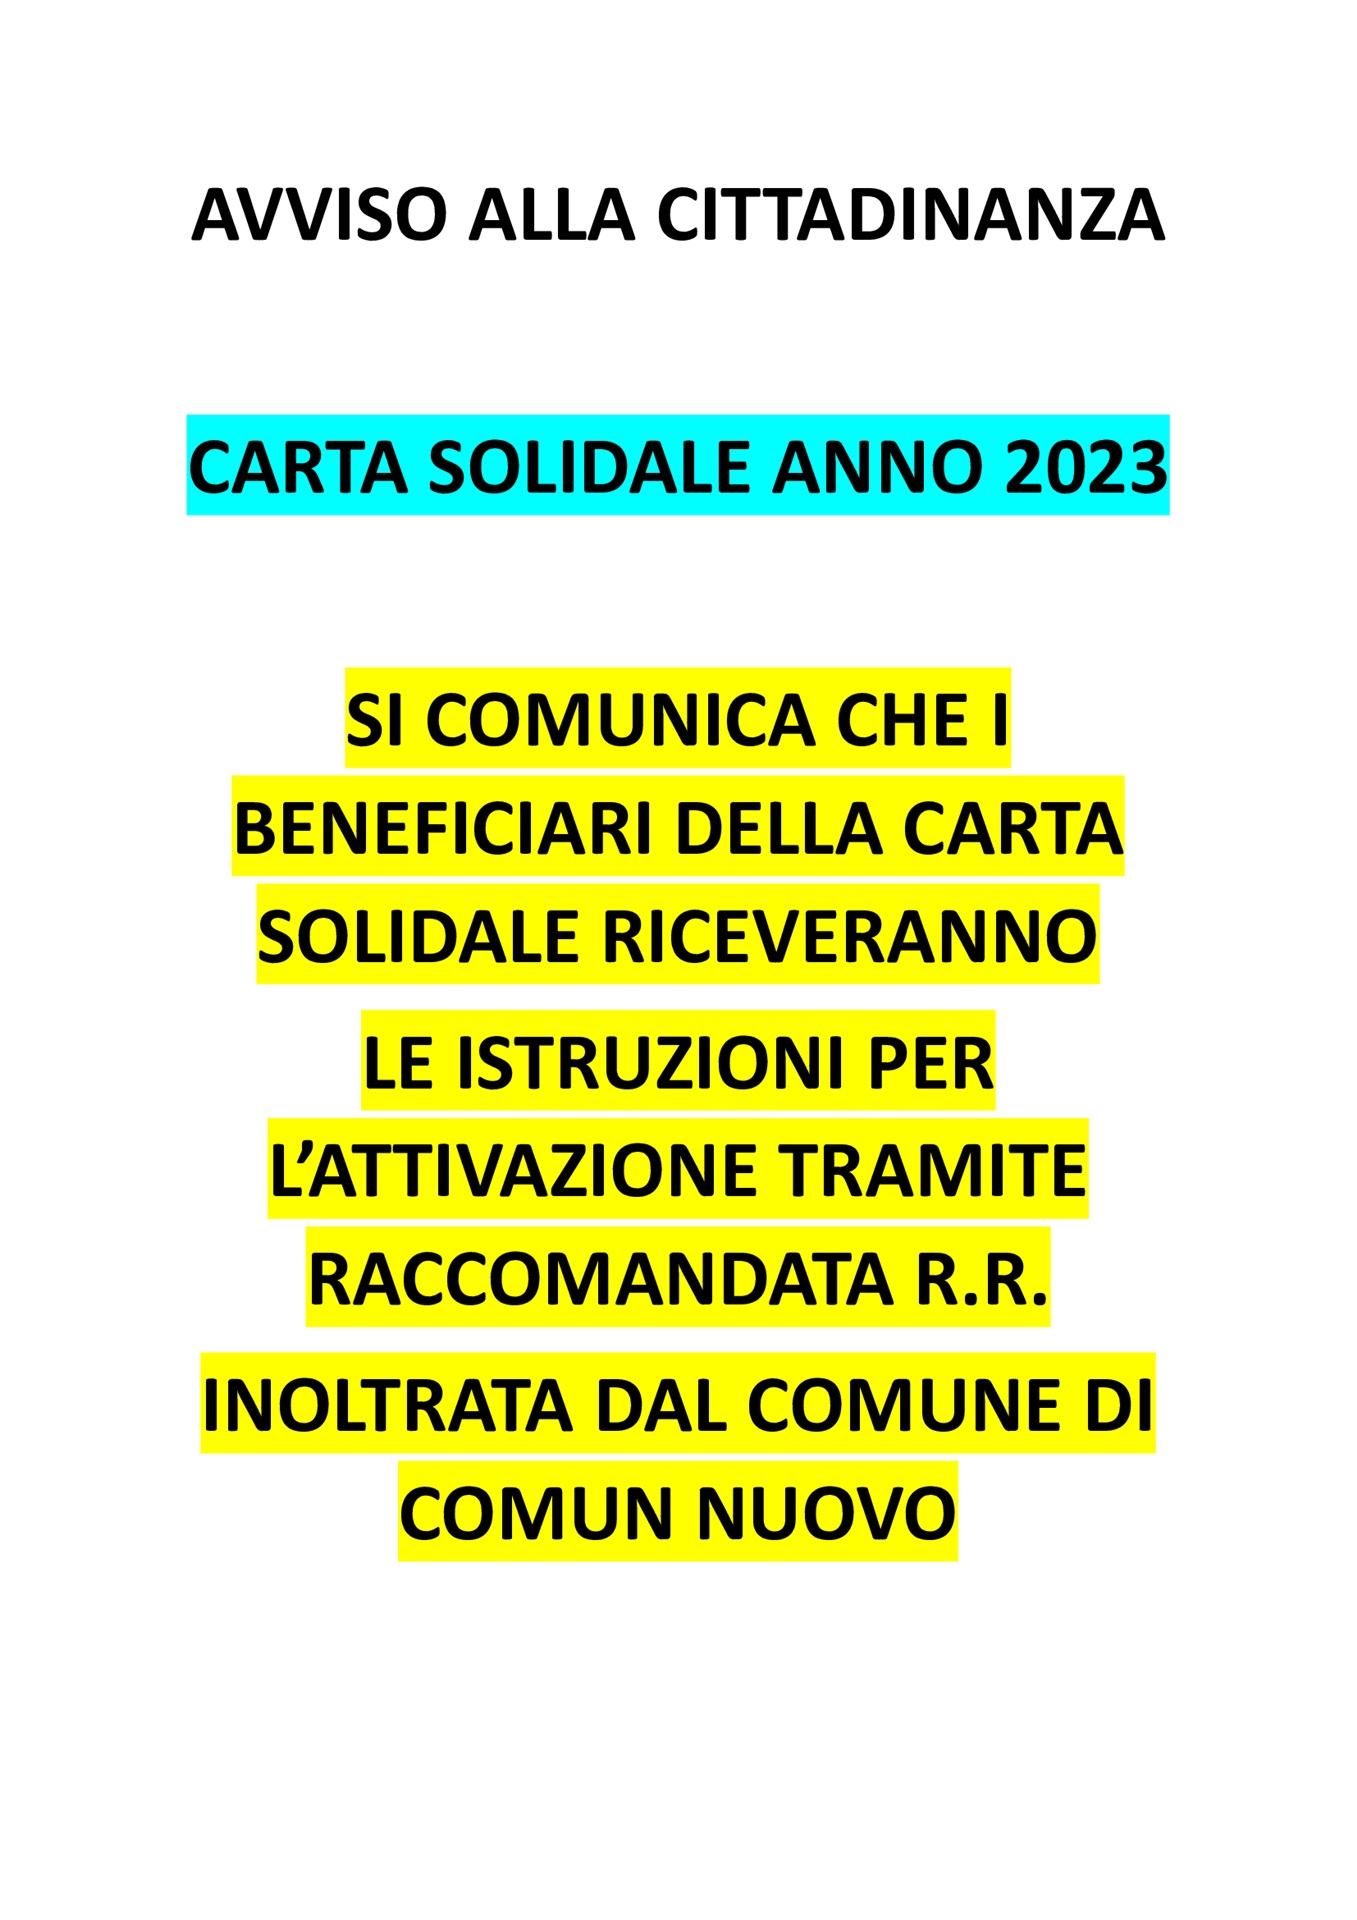 CARTA SOLIDALE 2023